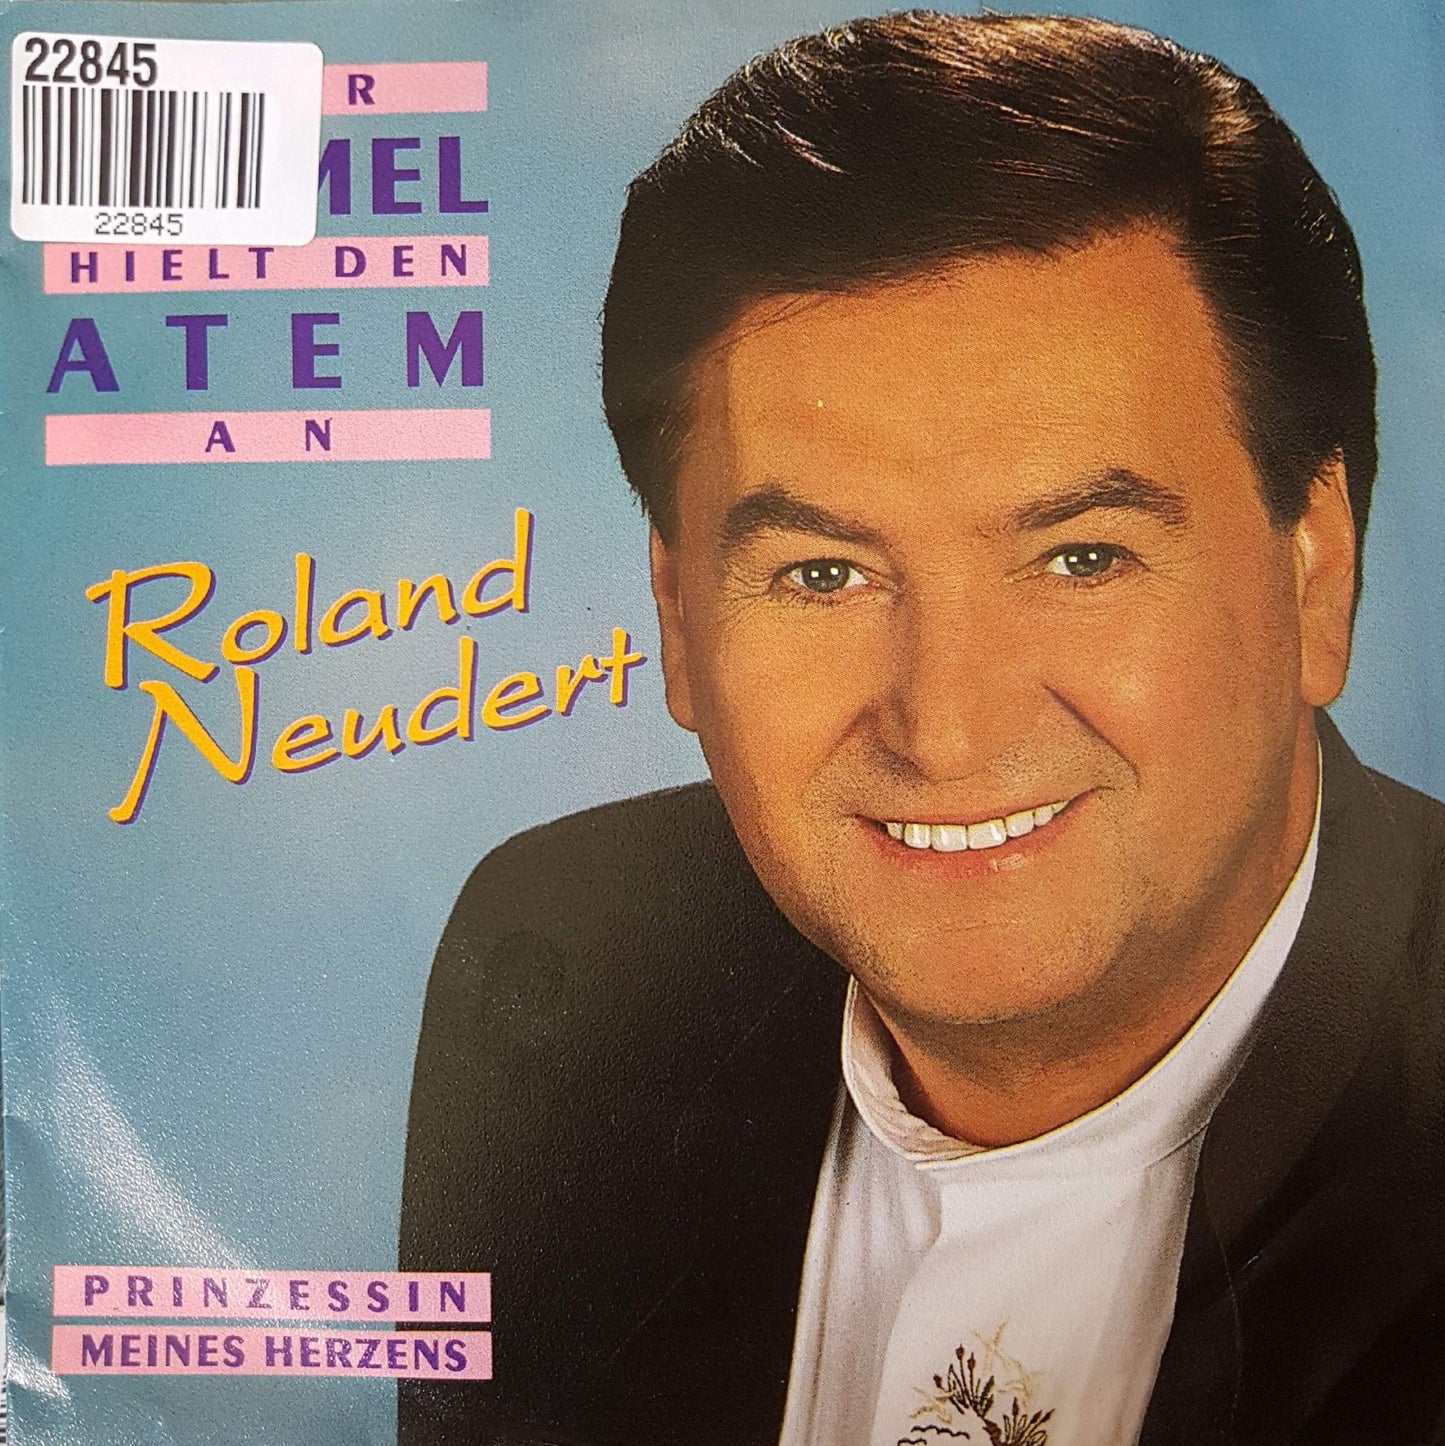 Roland Neudert - Der Himmel Hielt Den Atem An 22845 Vinyl Singles VINYLSINGLES.NL